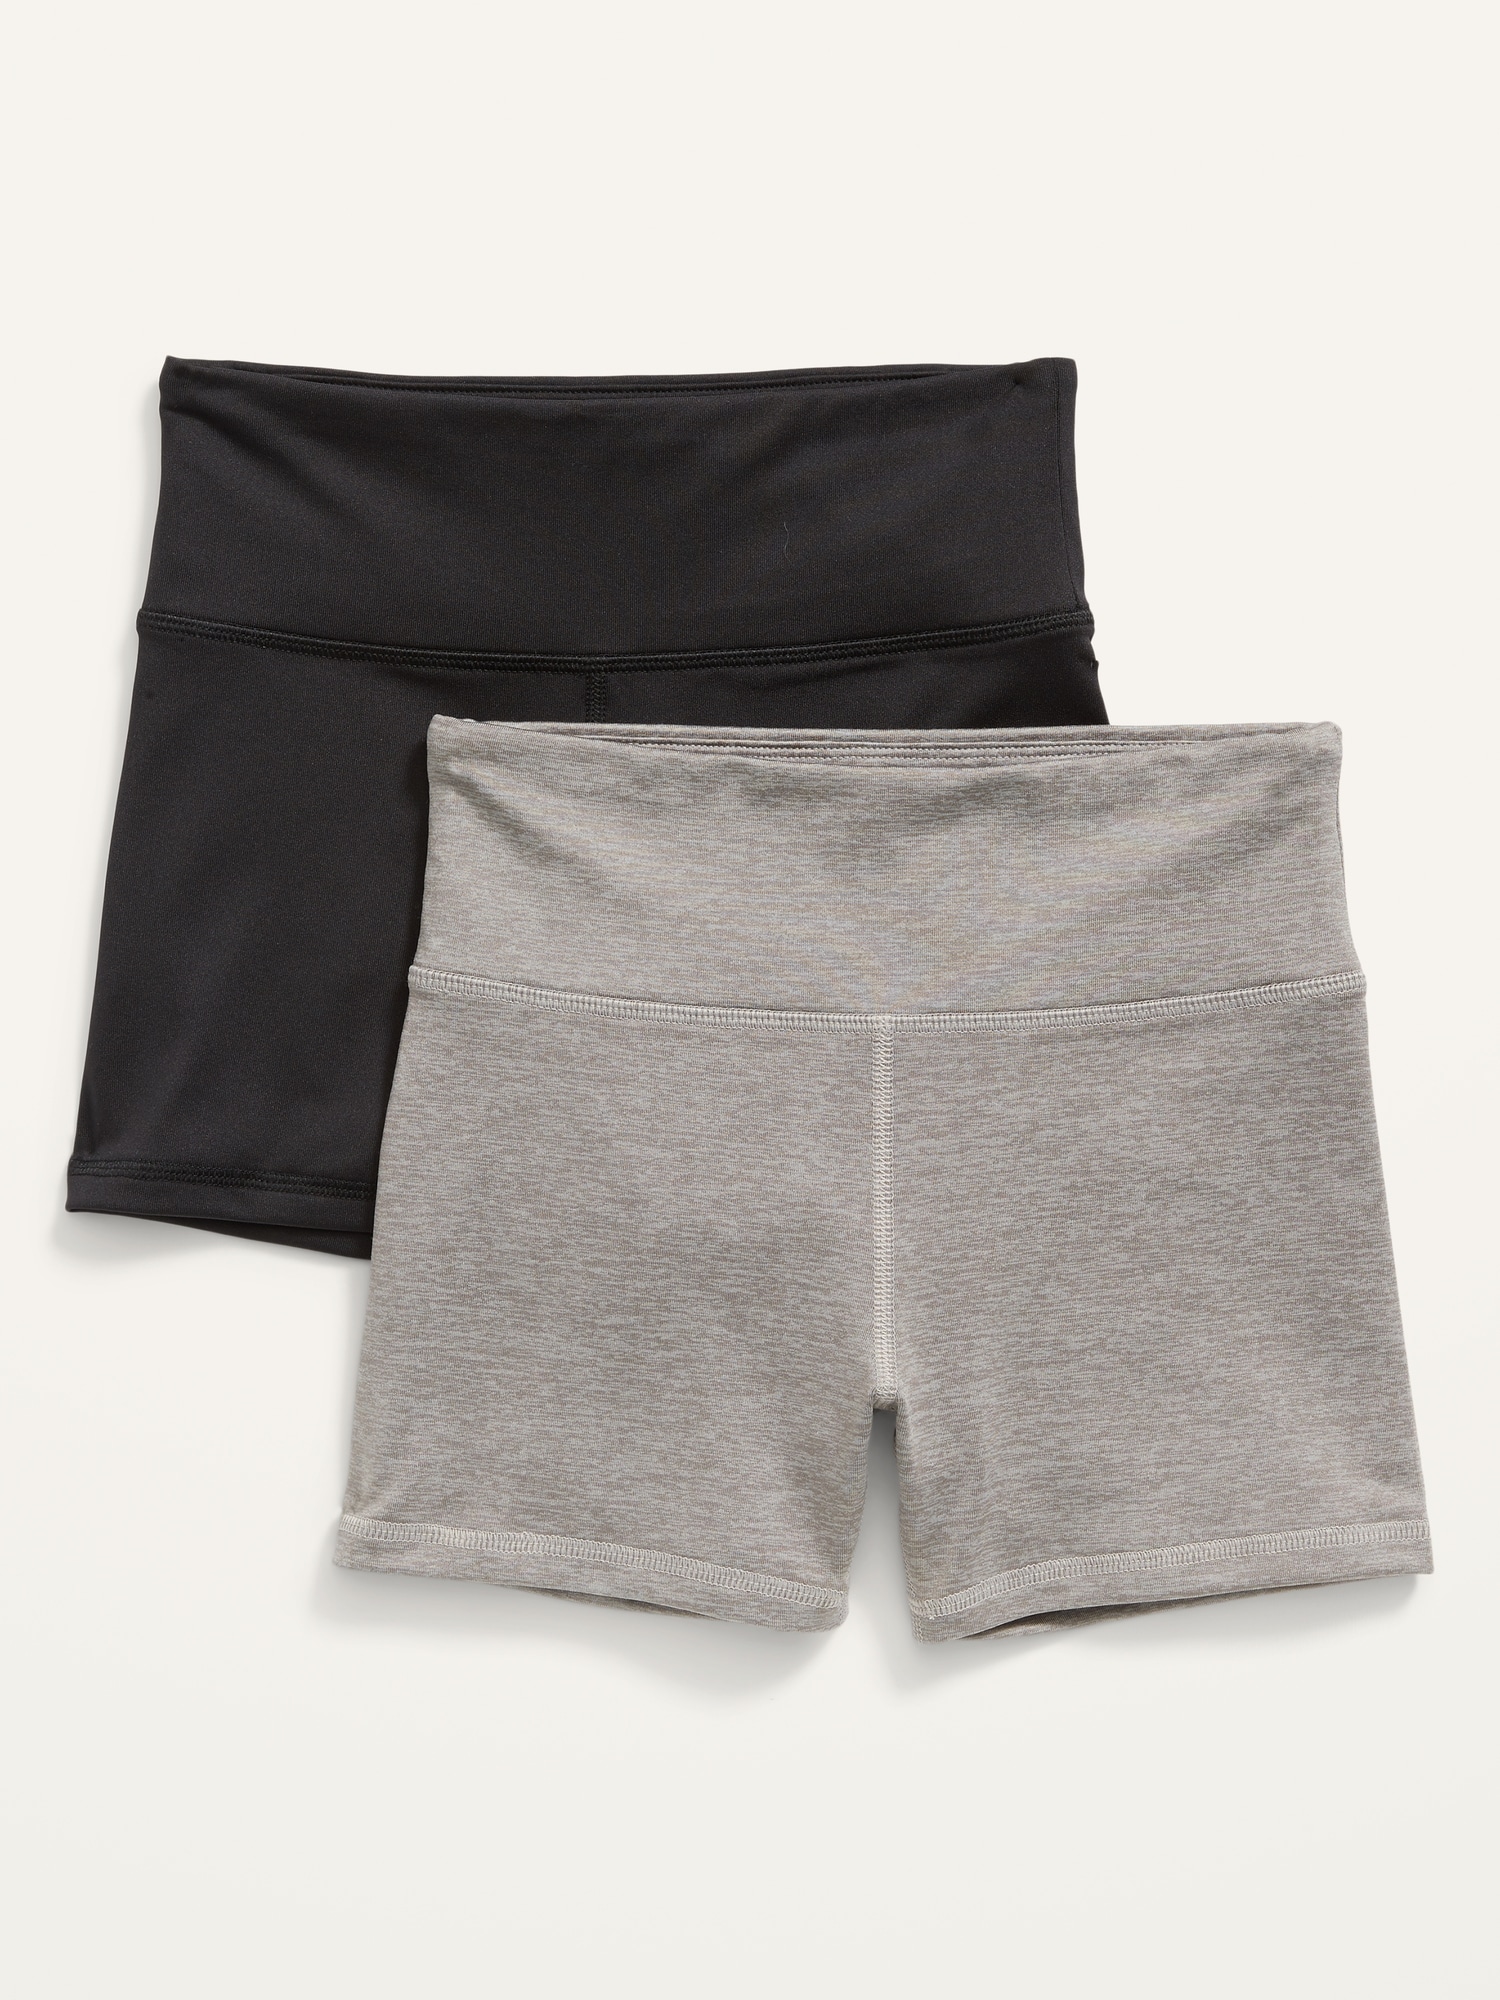 Old Navy 2-Pack High-Waisted Biker Shorts for Girls black. 1